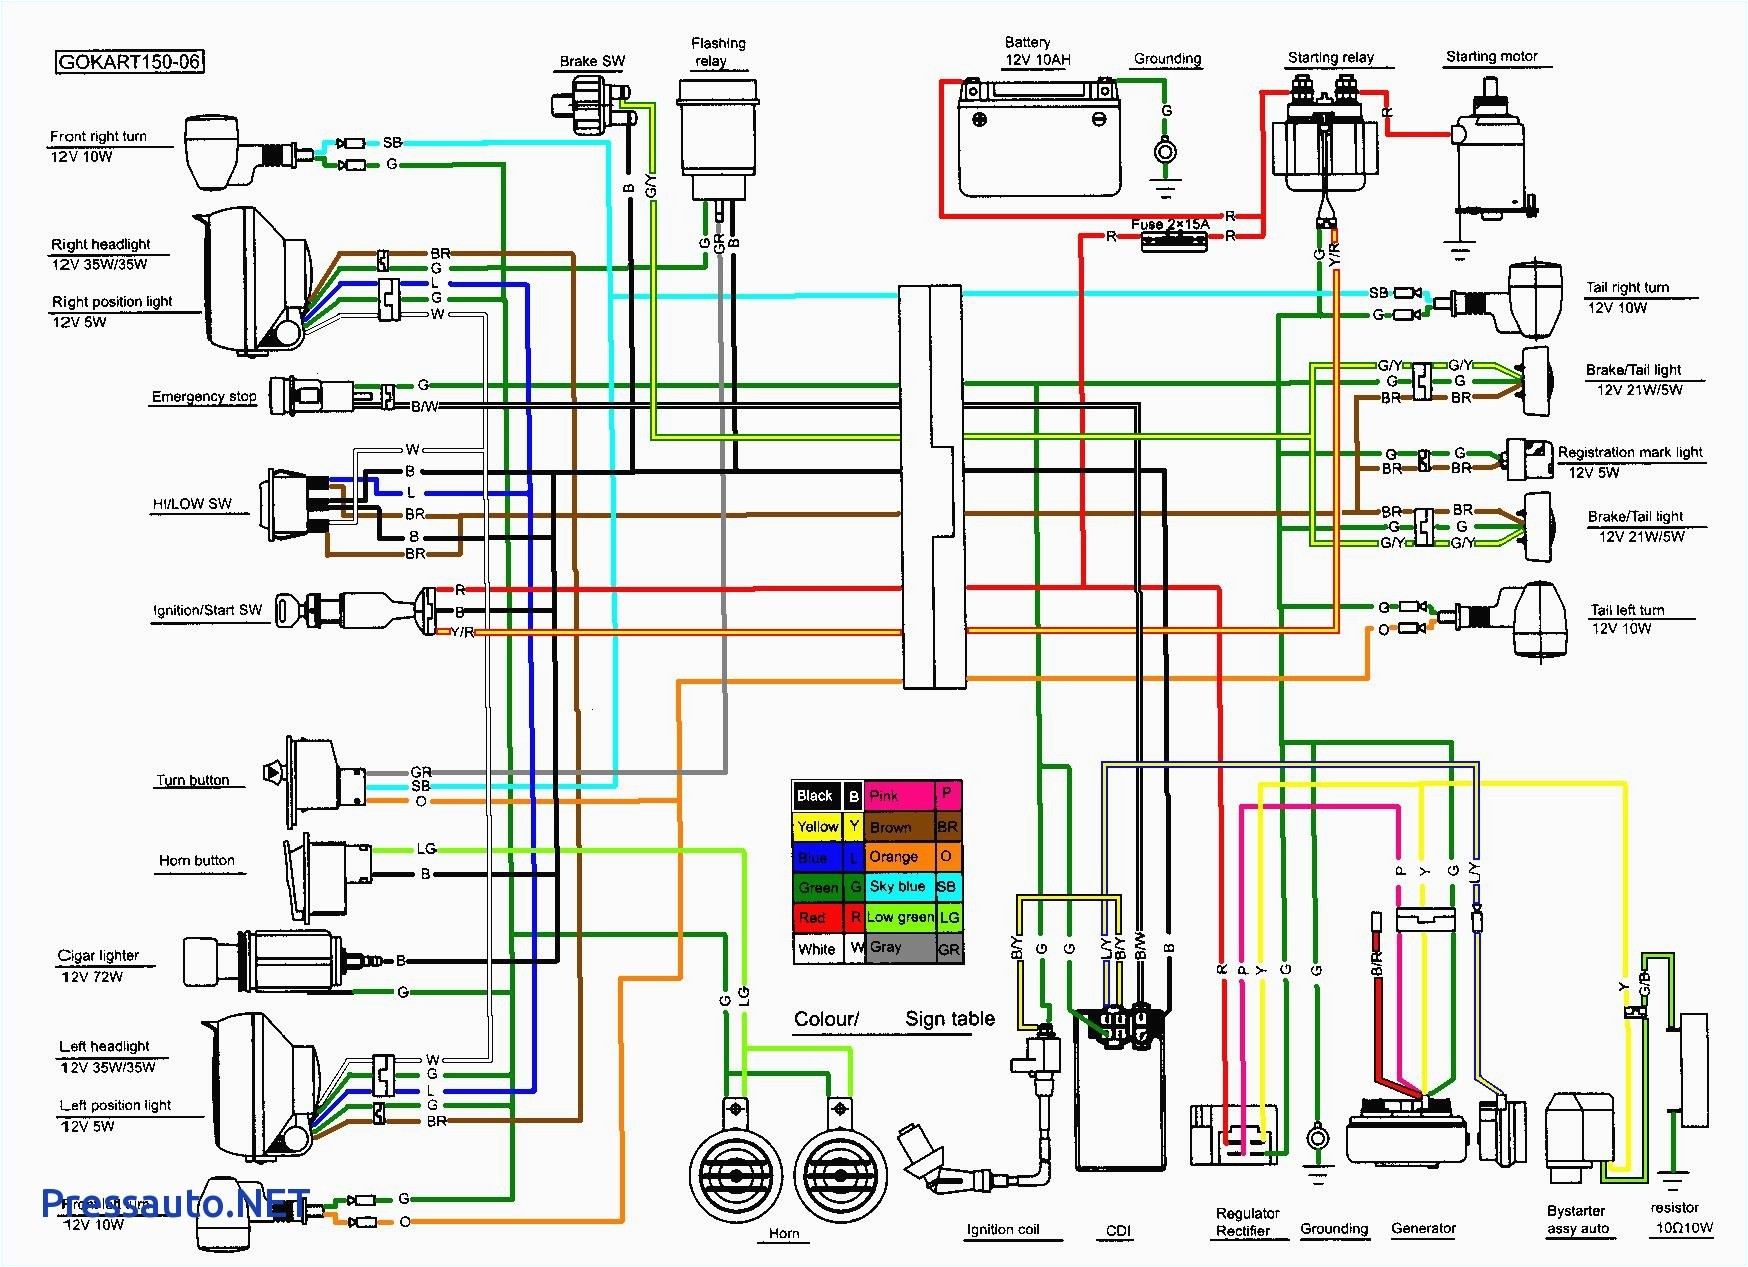 roketa wiring diagram wiring diagram user roketa bali 150 wiring diagram roketa 150cc wiring diagram